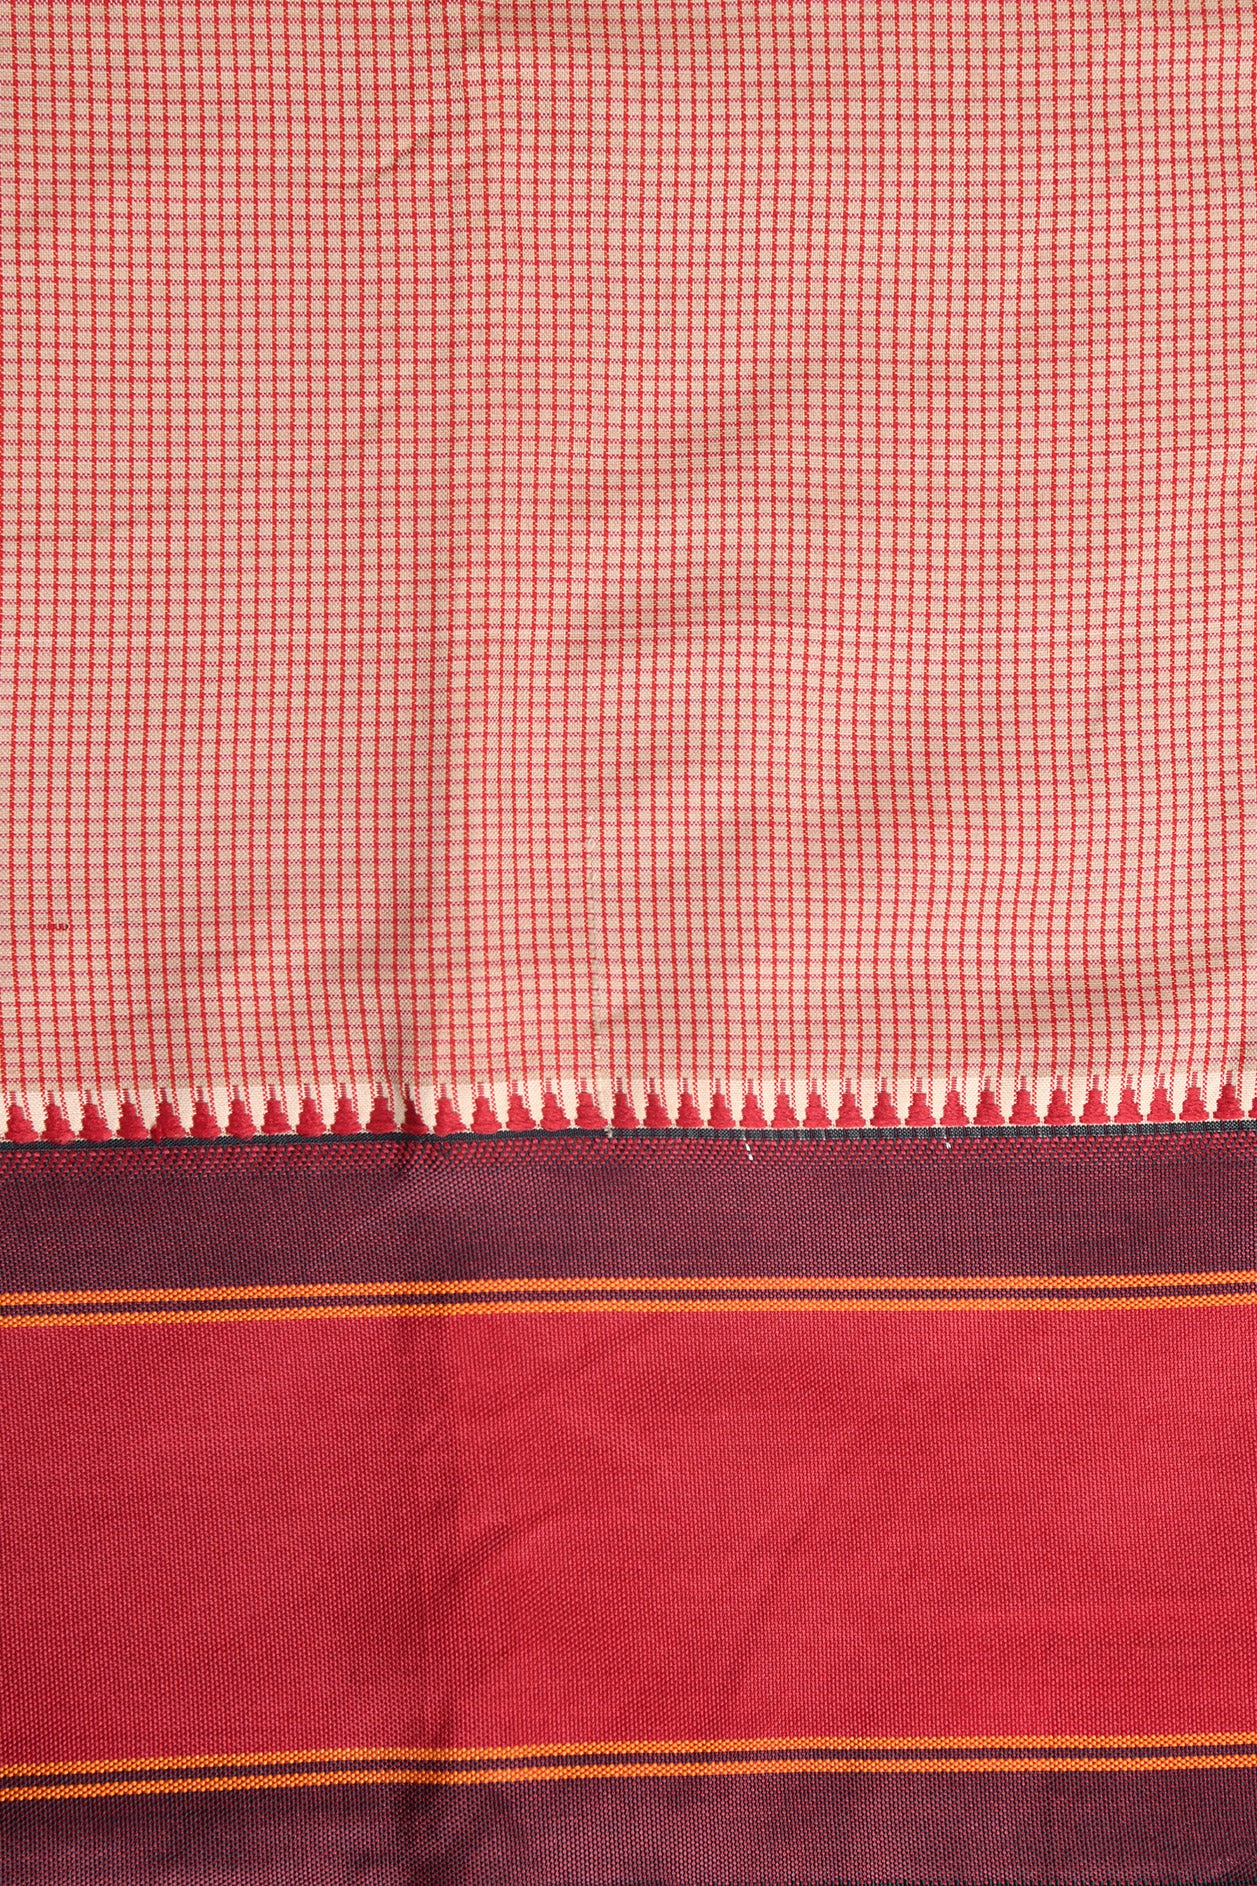 Checked Design Temple Border Beige Color Dharwad Cotton Saree